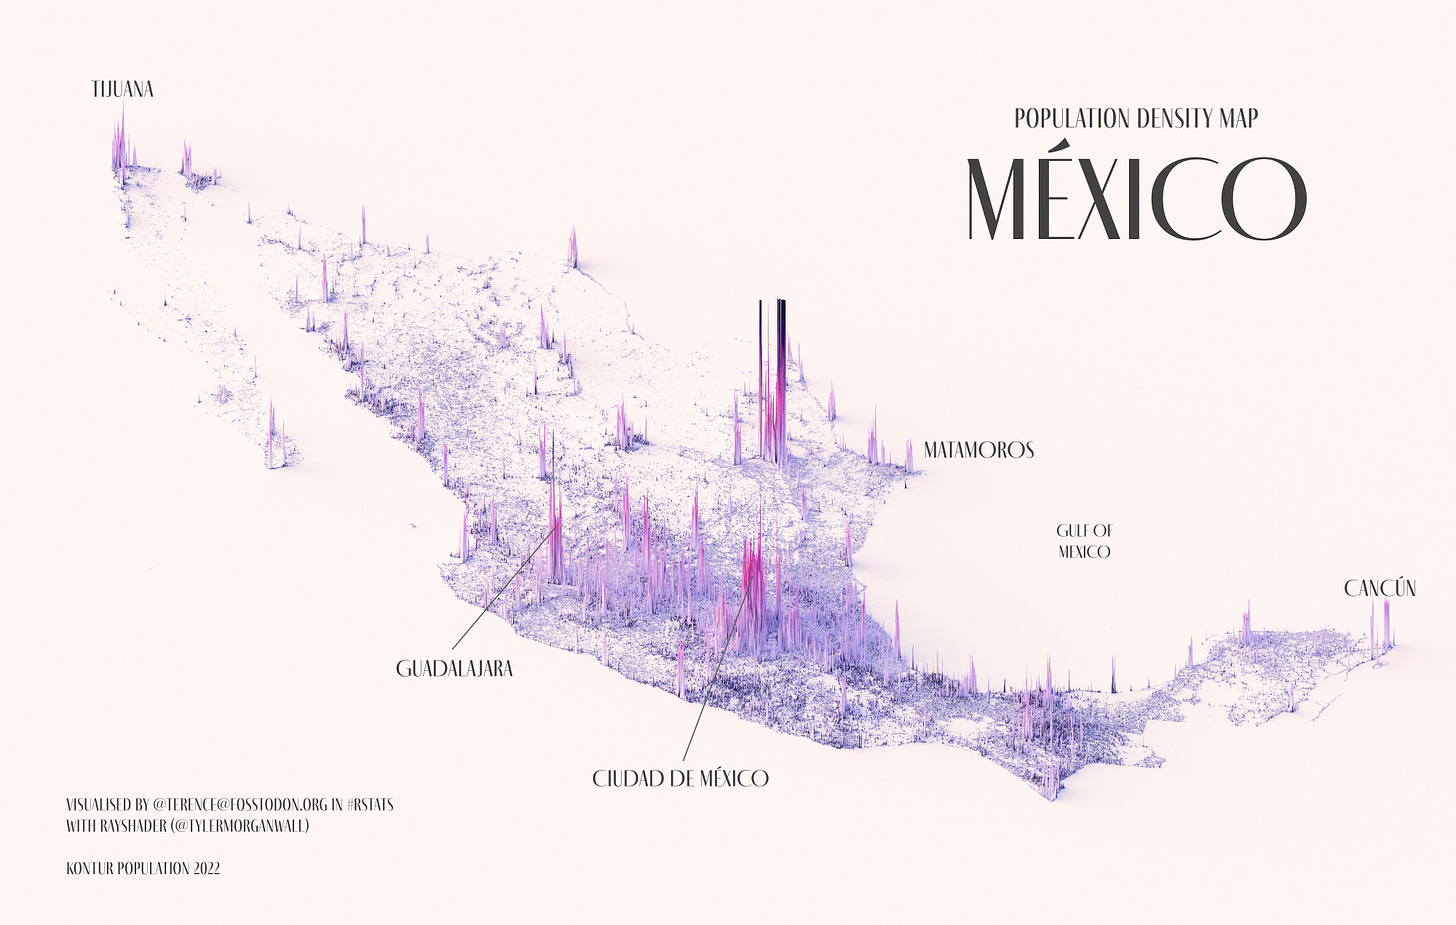 A population density map of México